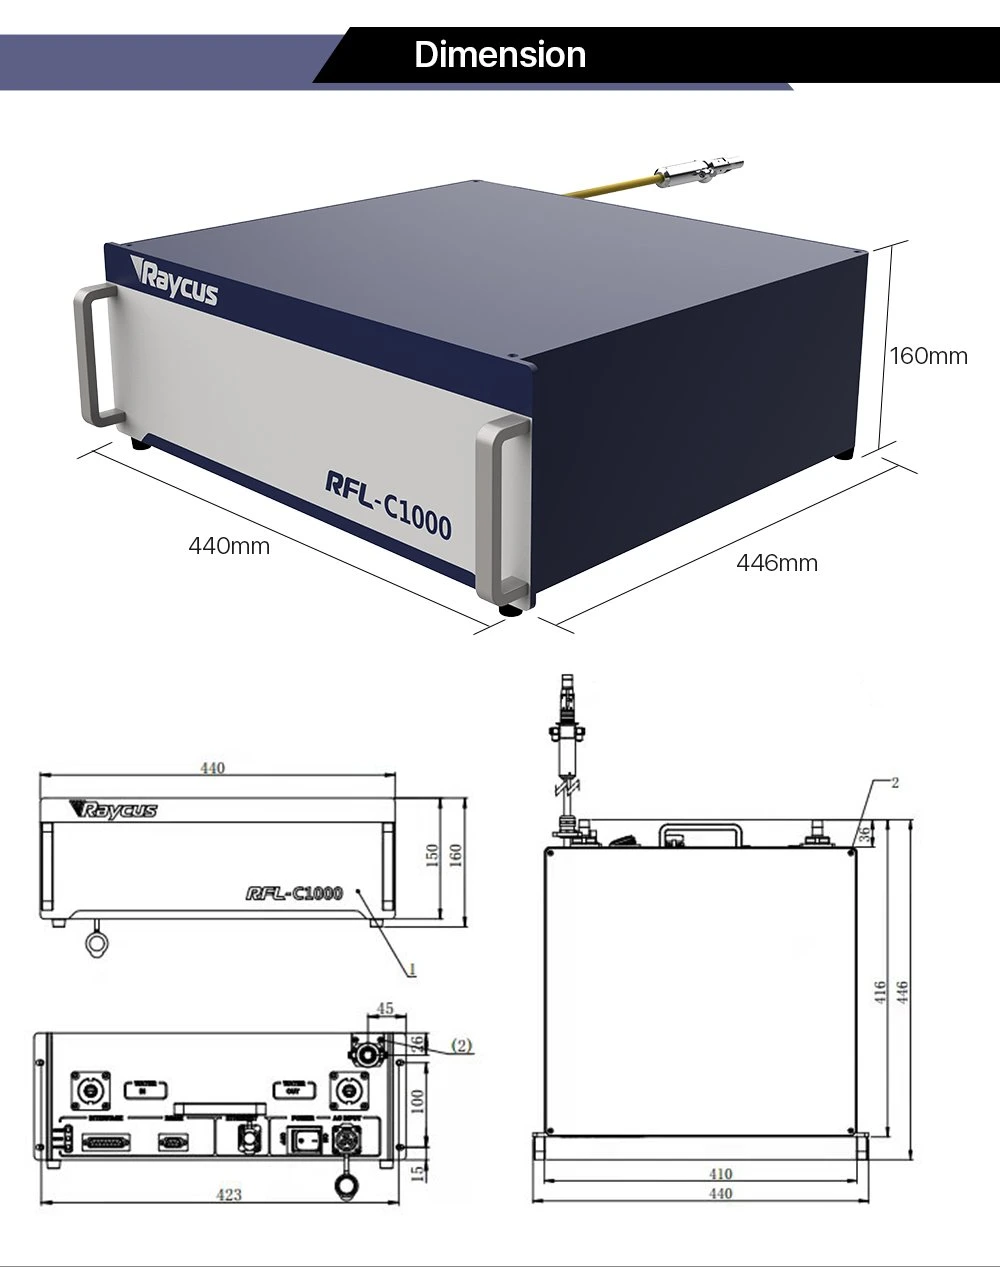 1000W Raycus Single Module Cw Fiber Laser Source for Fiber Cutting Rfl-C1000